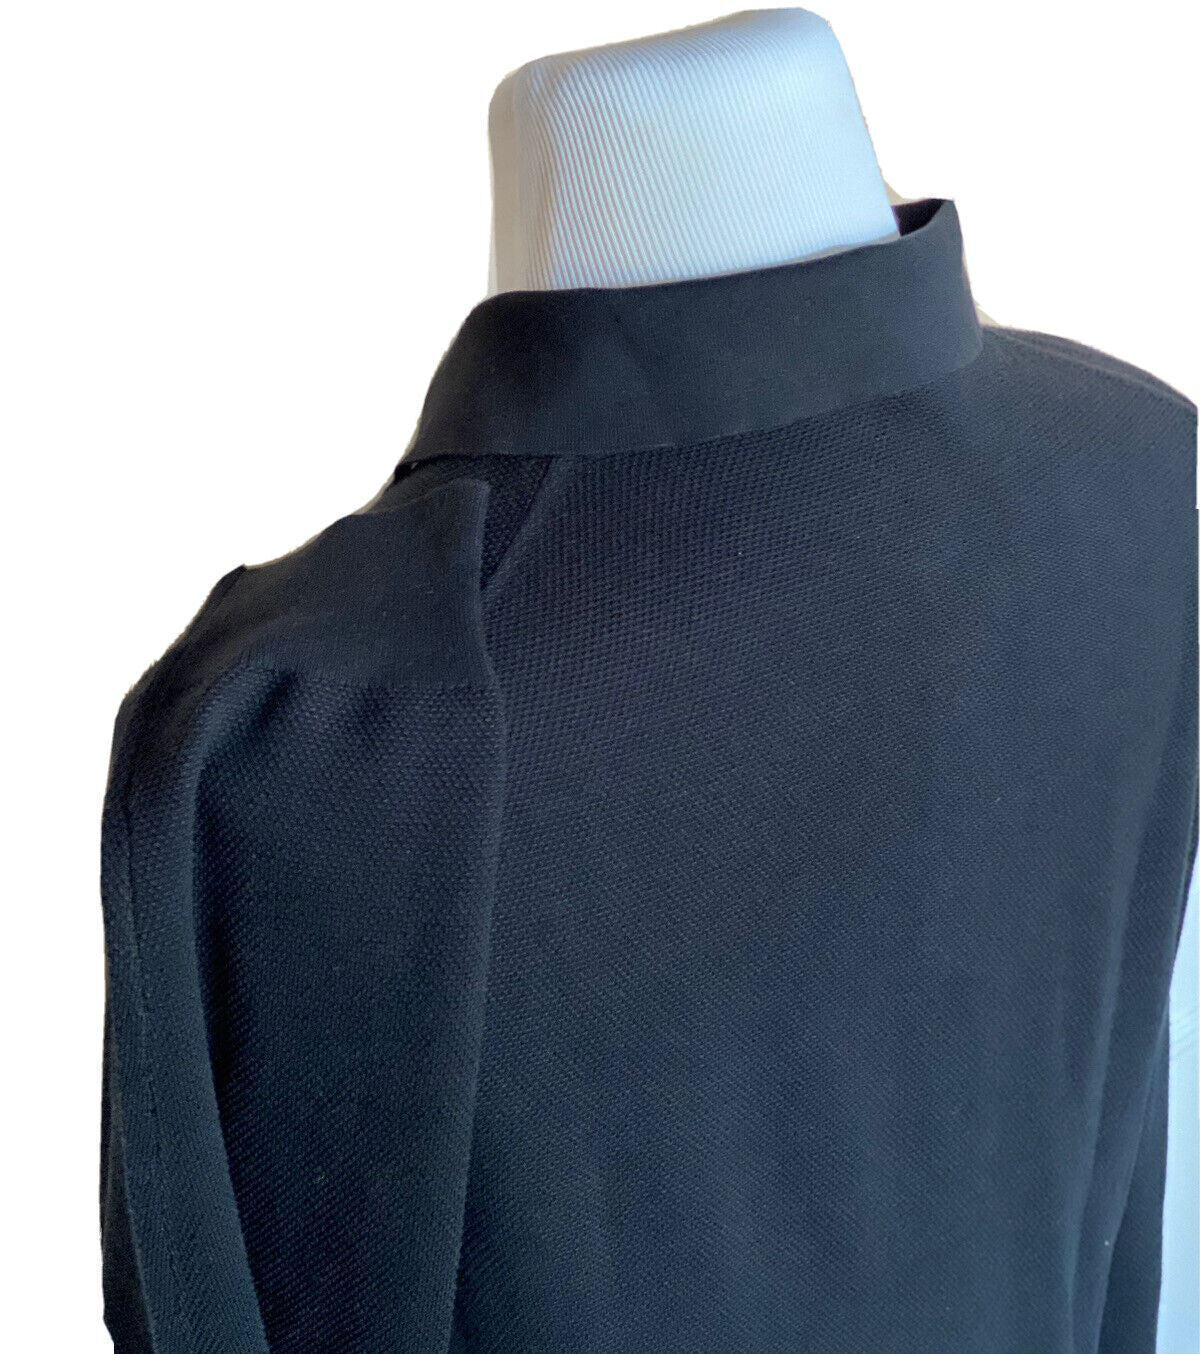 NWT $795 Ralph Lauren Purple Label Silk/Cotton Black Polo Shirt S Italy